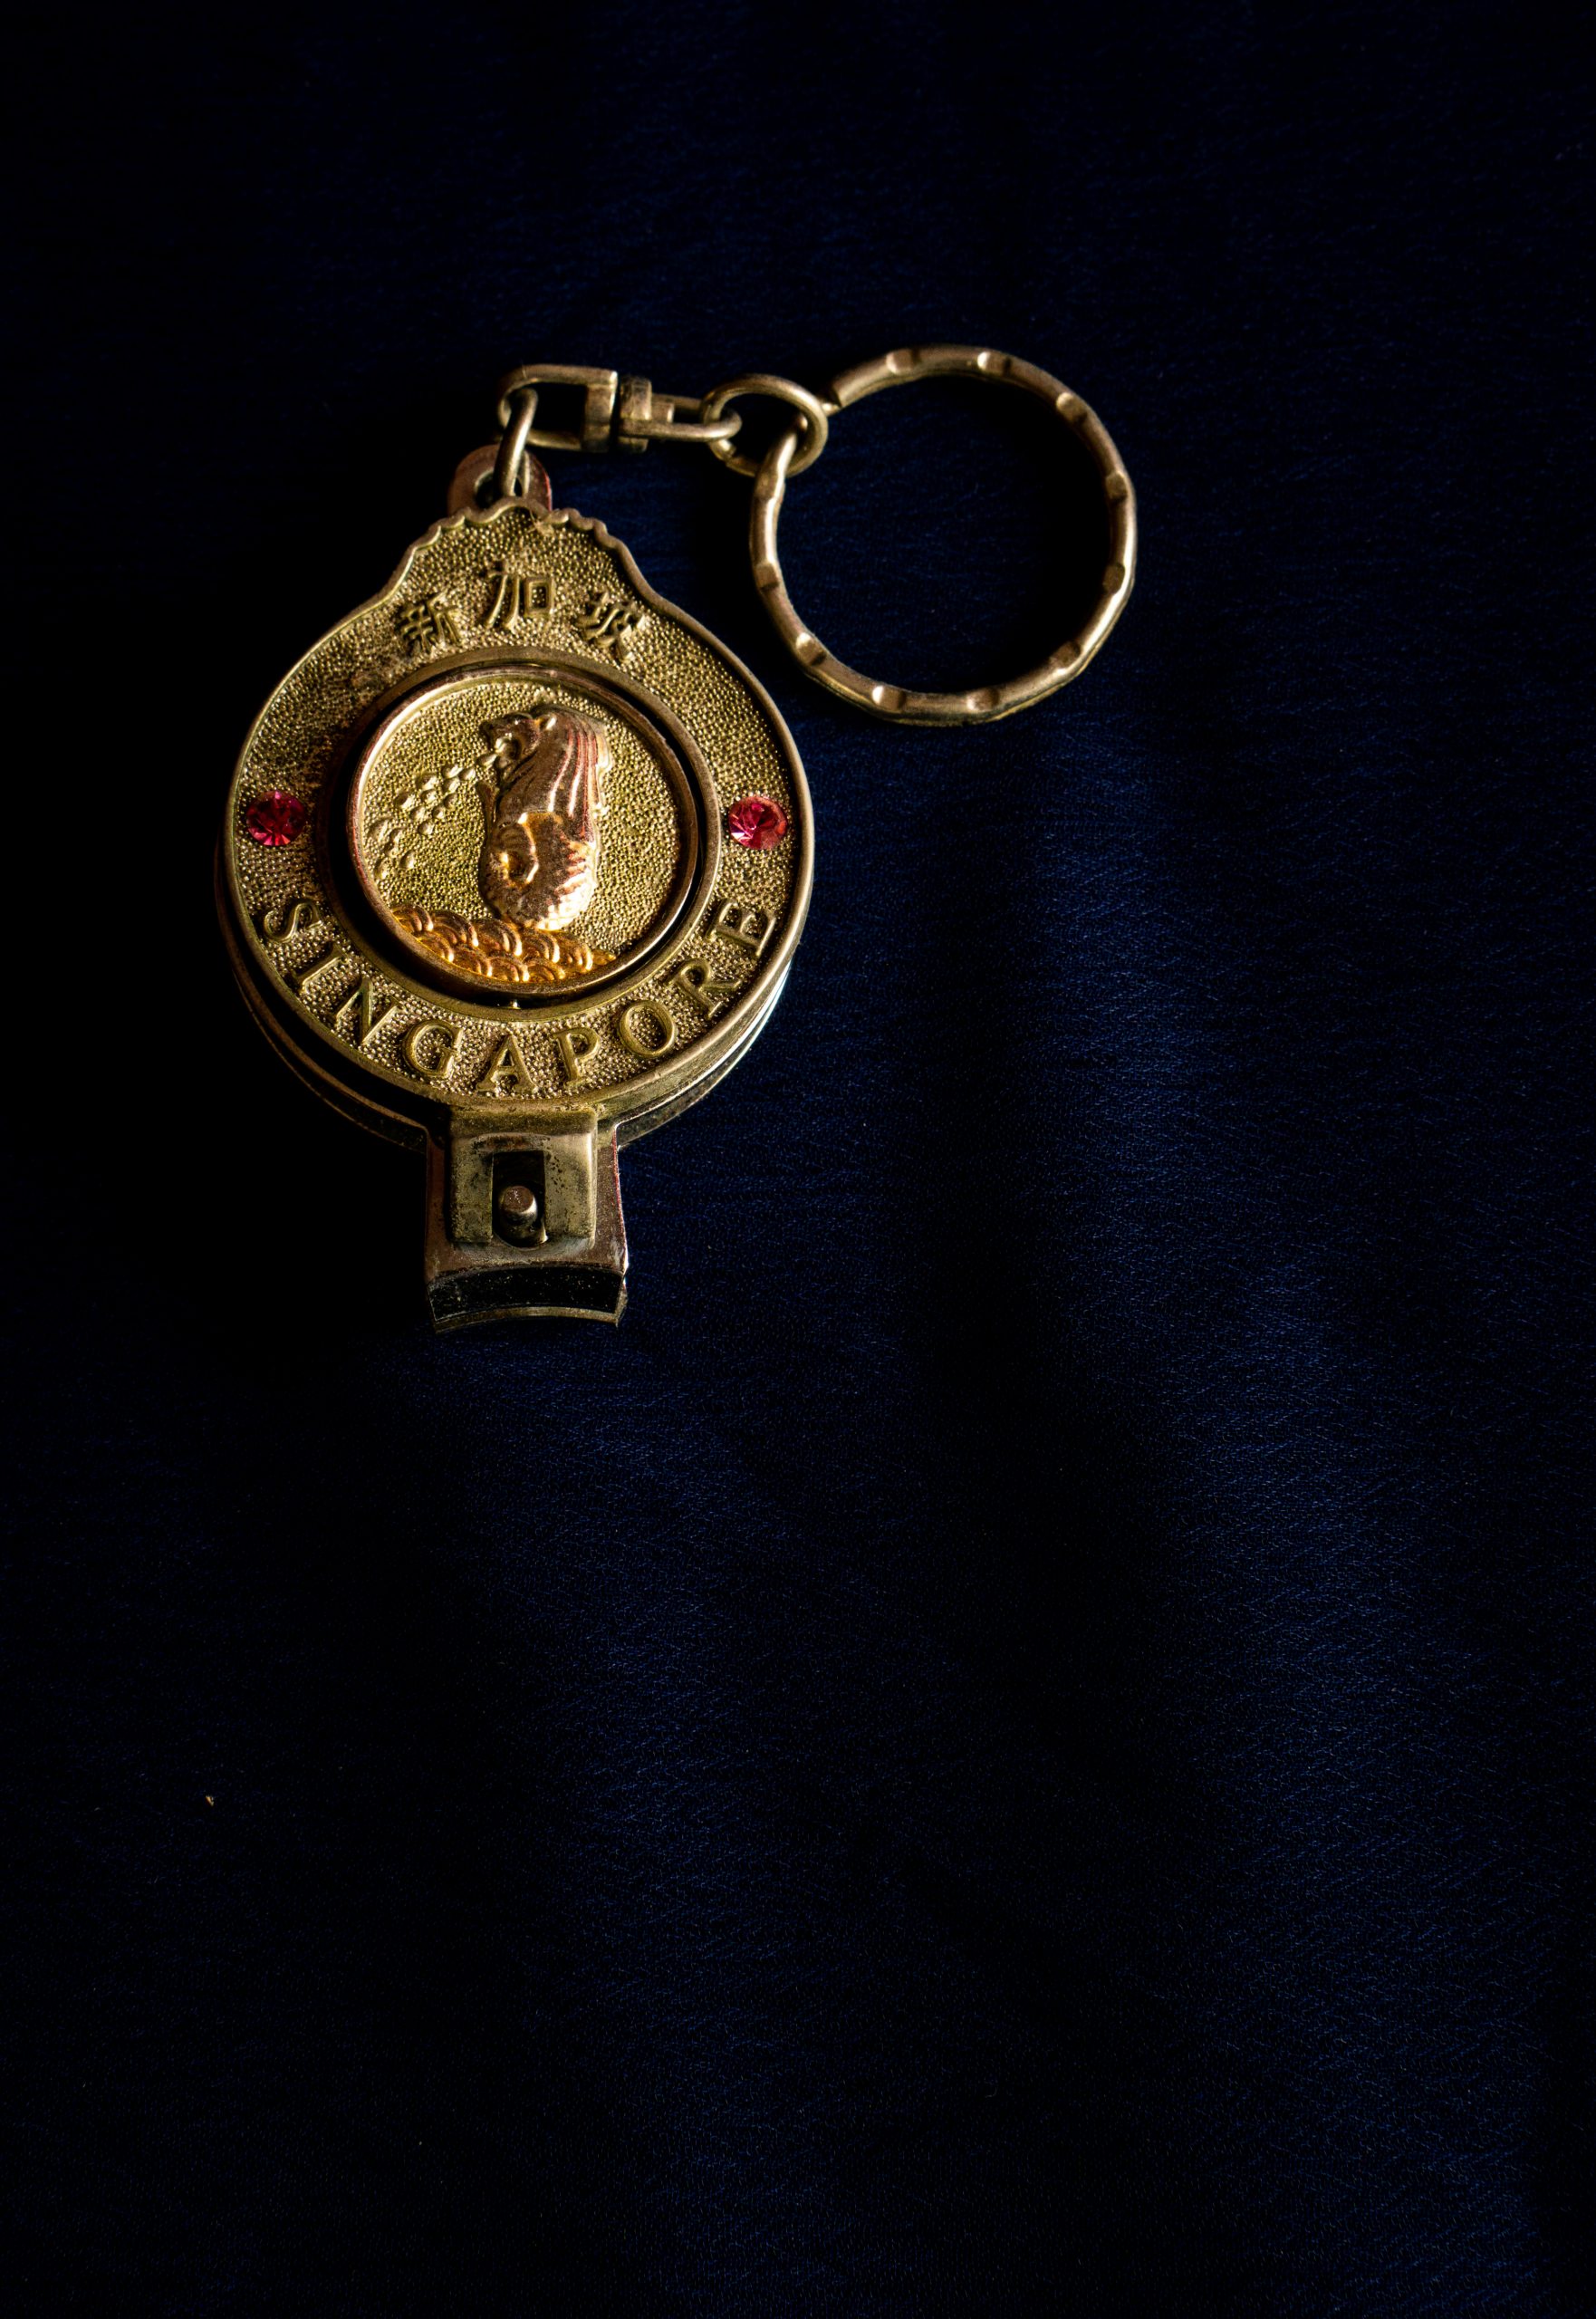 A keychain